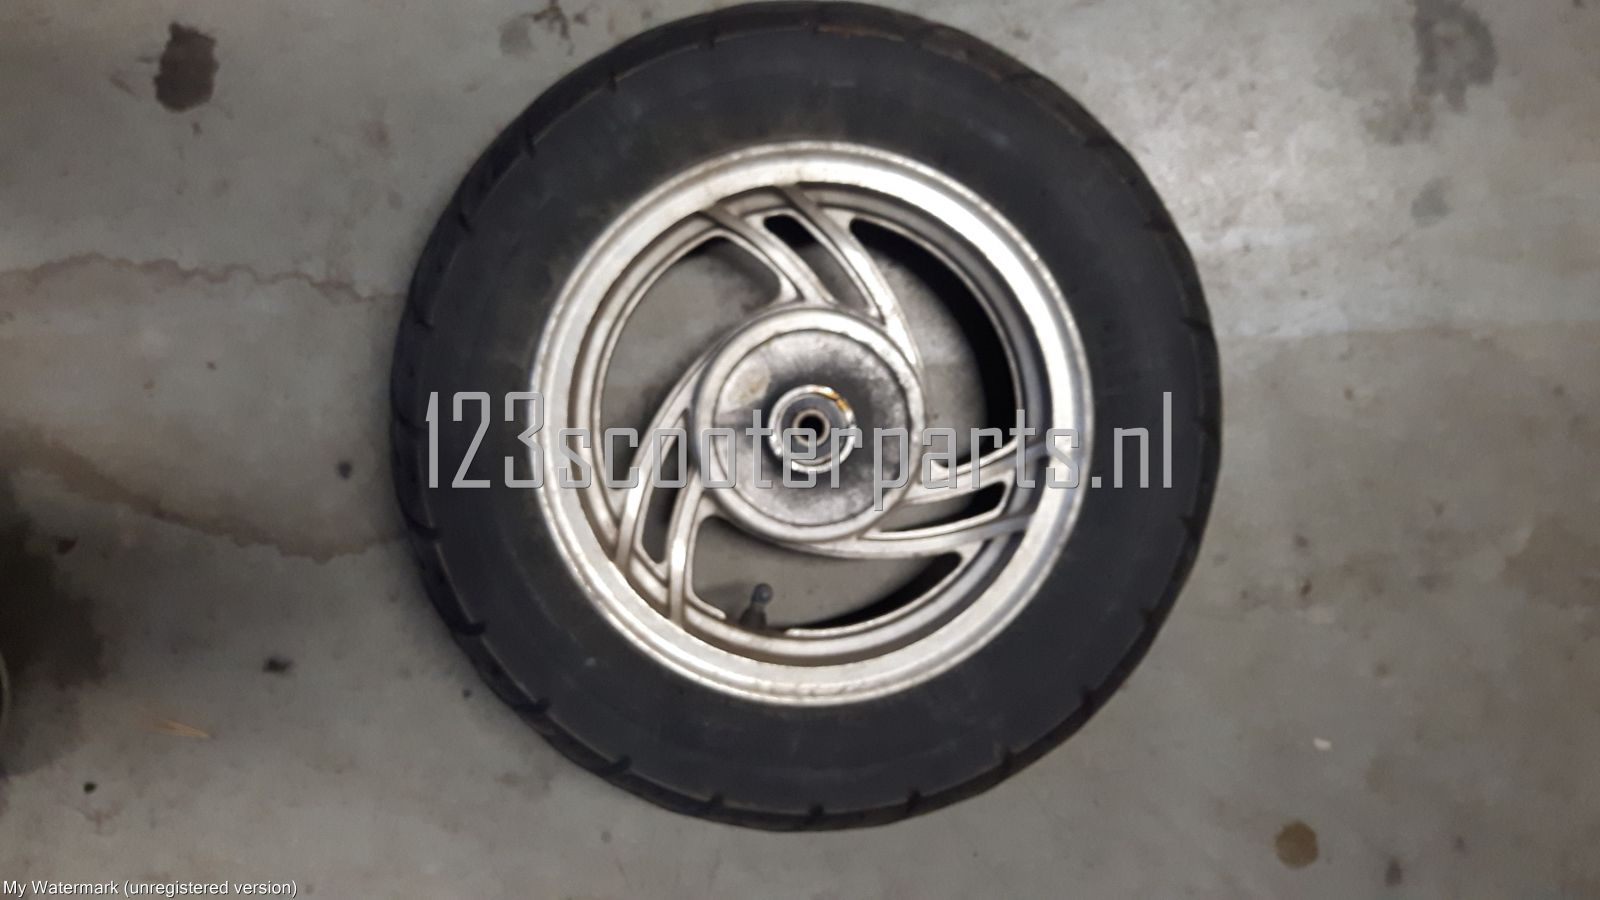 Peugeot V-Clic Vorderrad mit Reifen